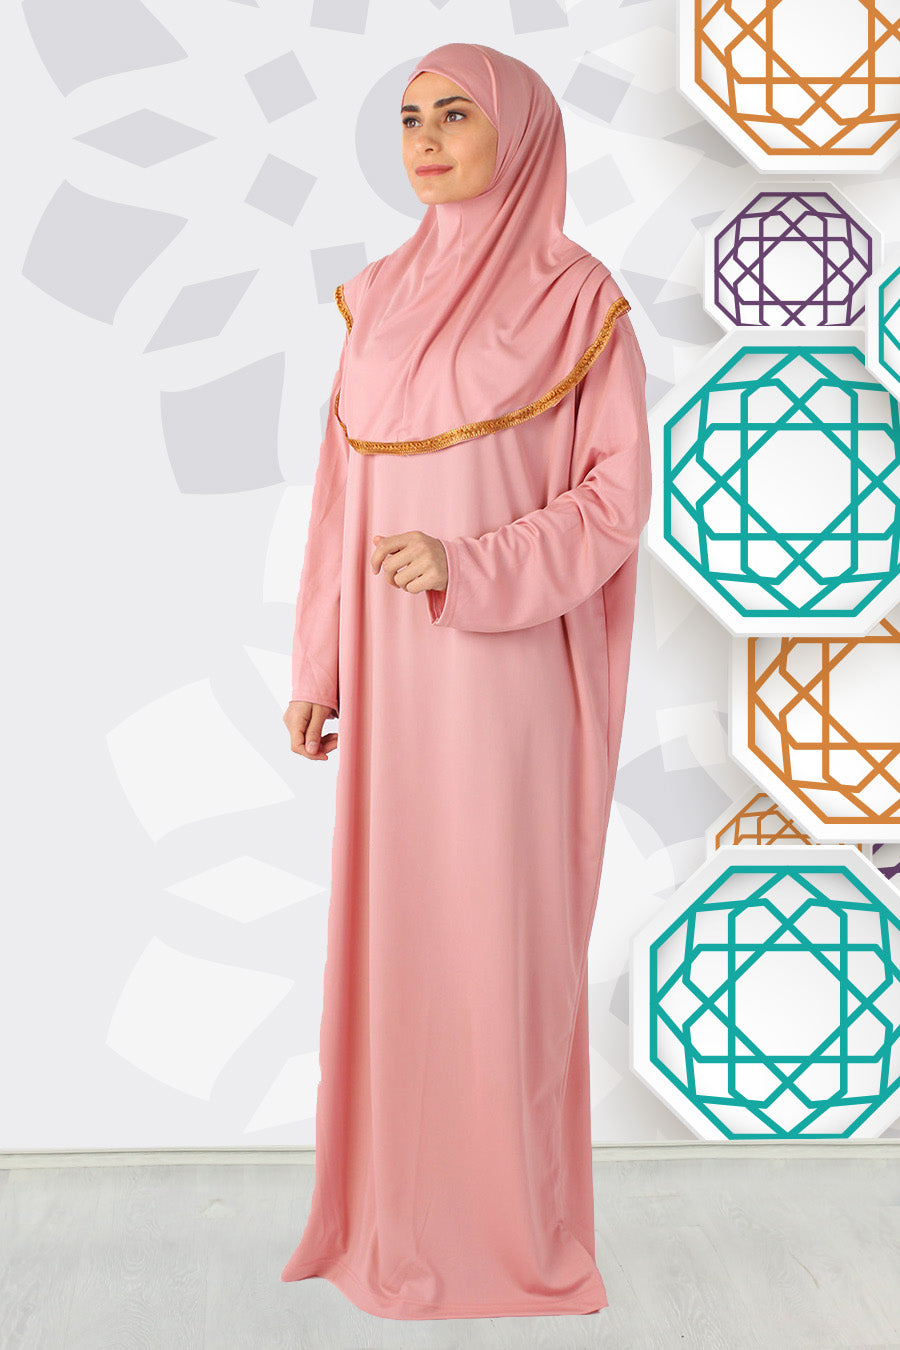 Lt Pink with Lace Turkish Prayer Dress